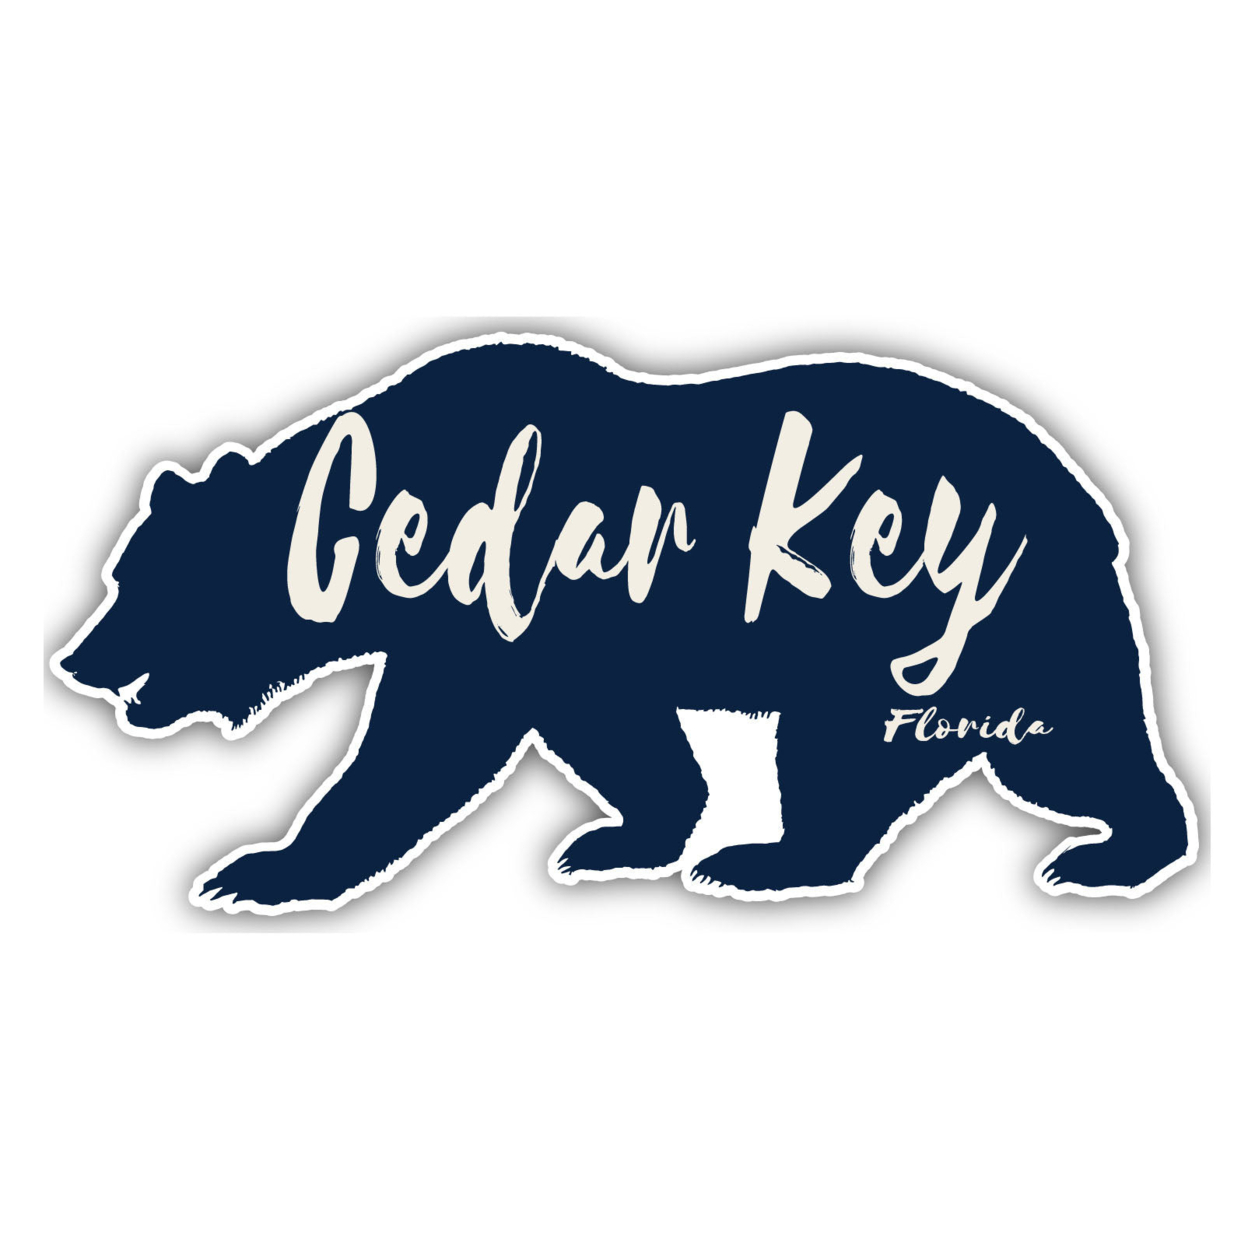 Cedar Key Florida Souvenir Decorative Stickers (Choose Theme And Size) - 4-Pack, 6-Inch, Tent